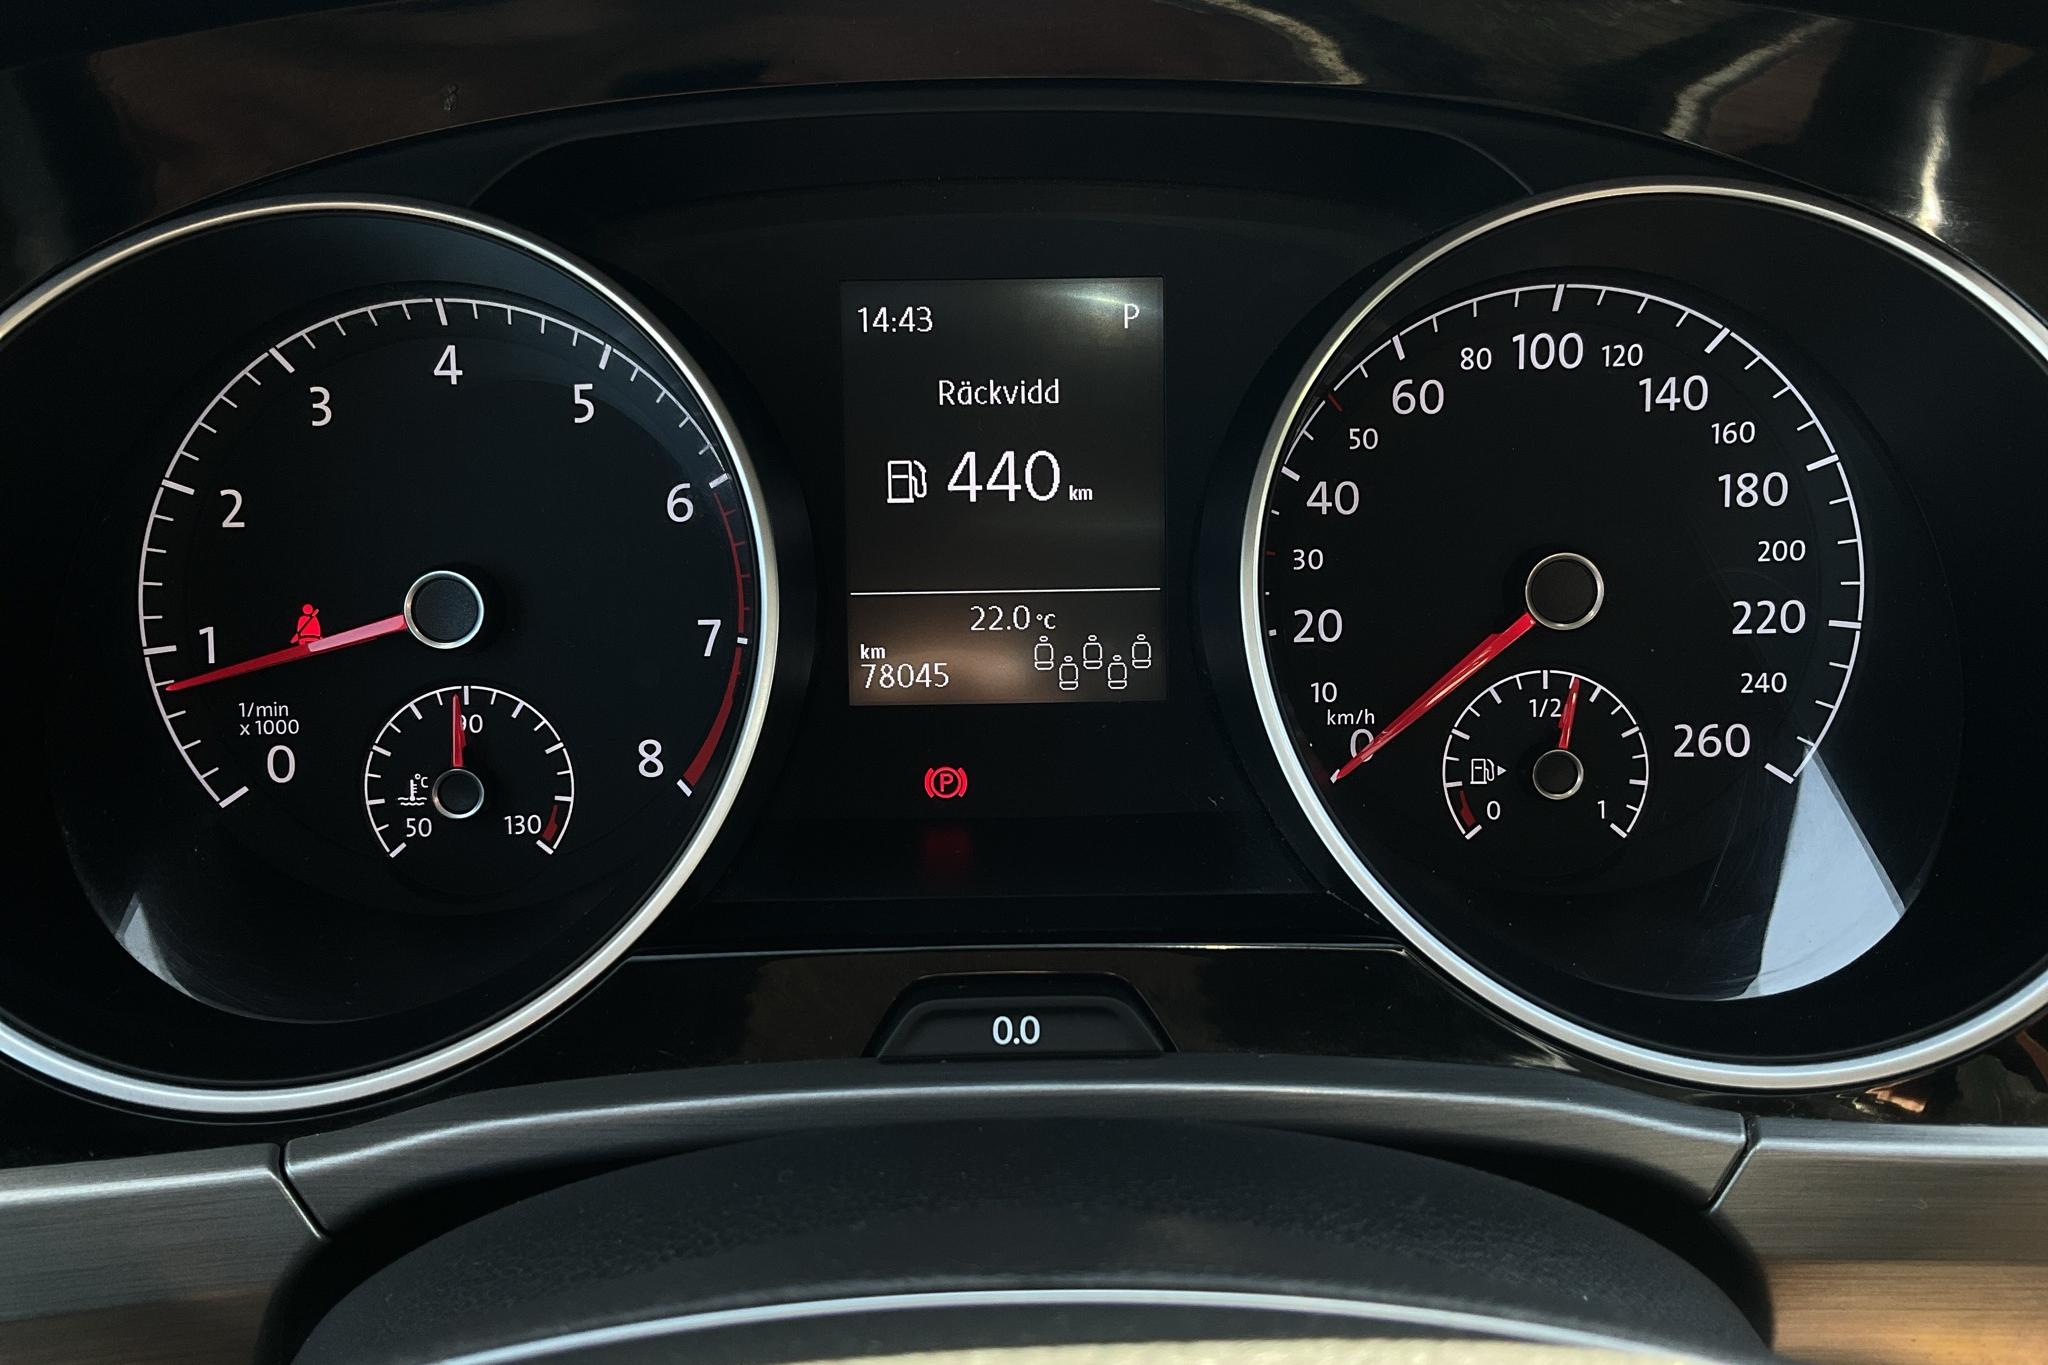 VW Touran 1.4 TSI (150hk) - 78 040 km - Automatic - Light Blue - 2018